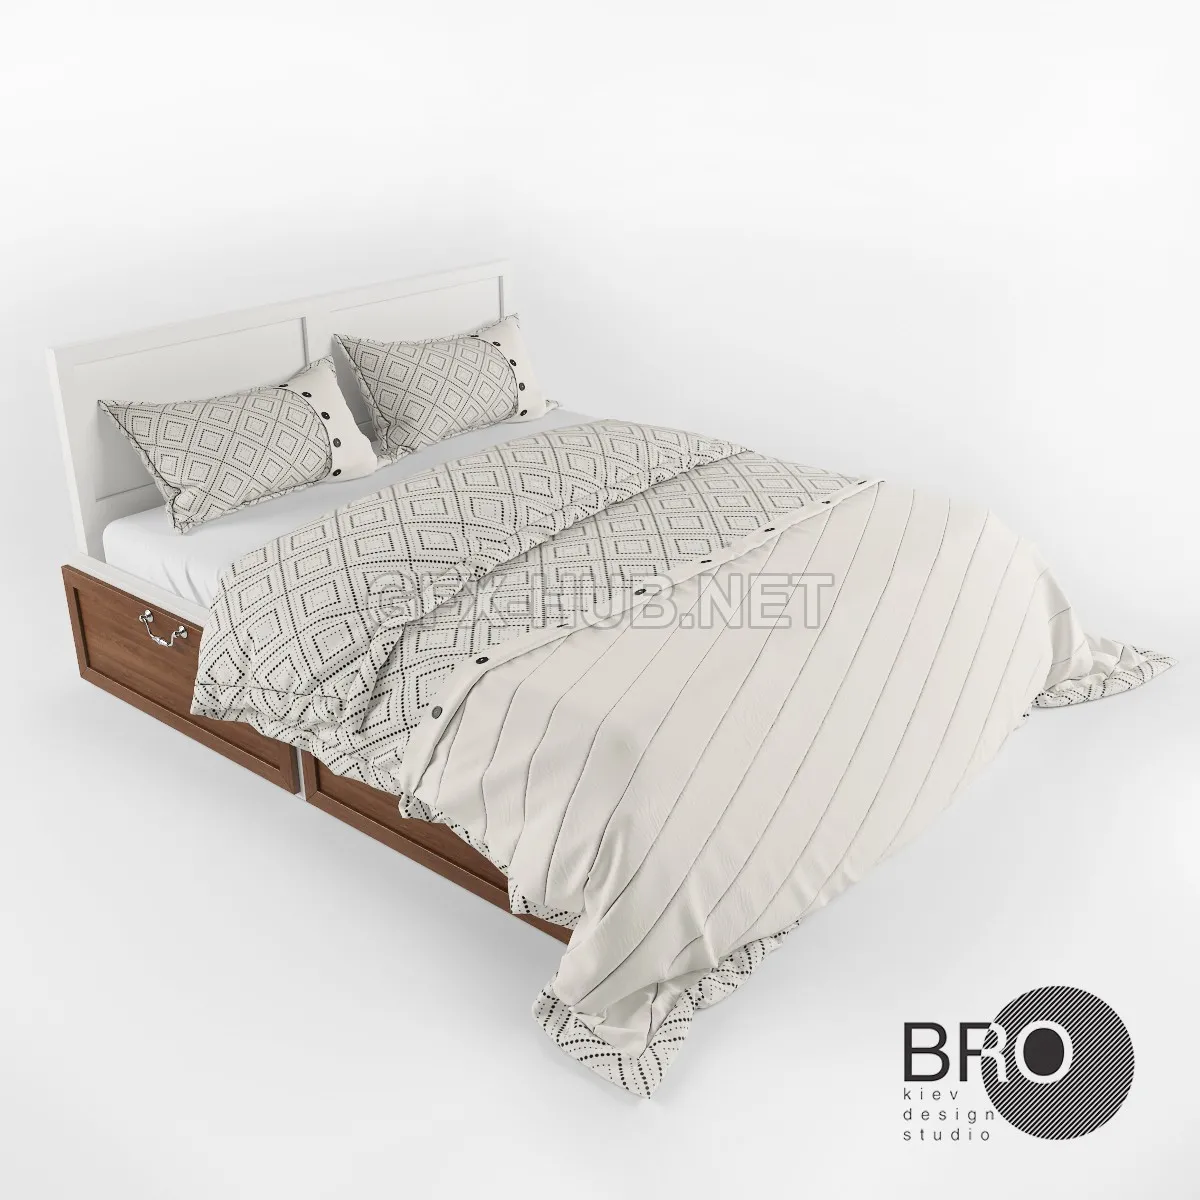 Bedding from BRO Design Studio – 207869